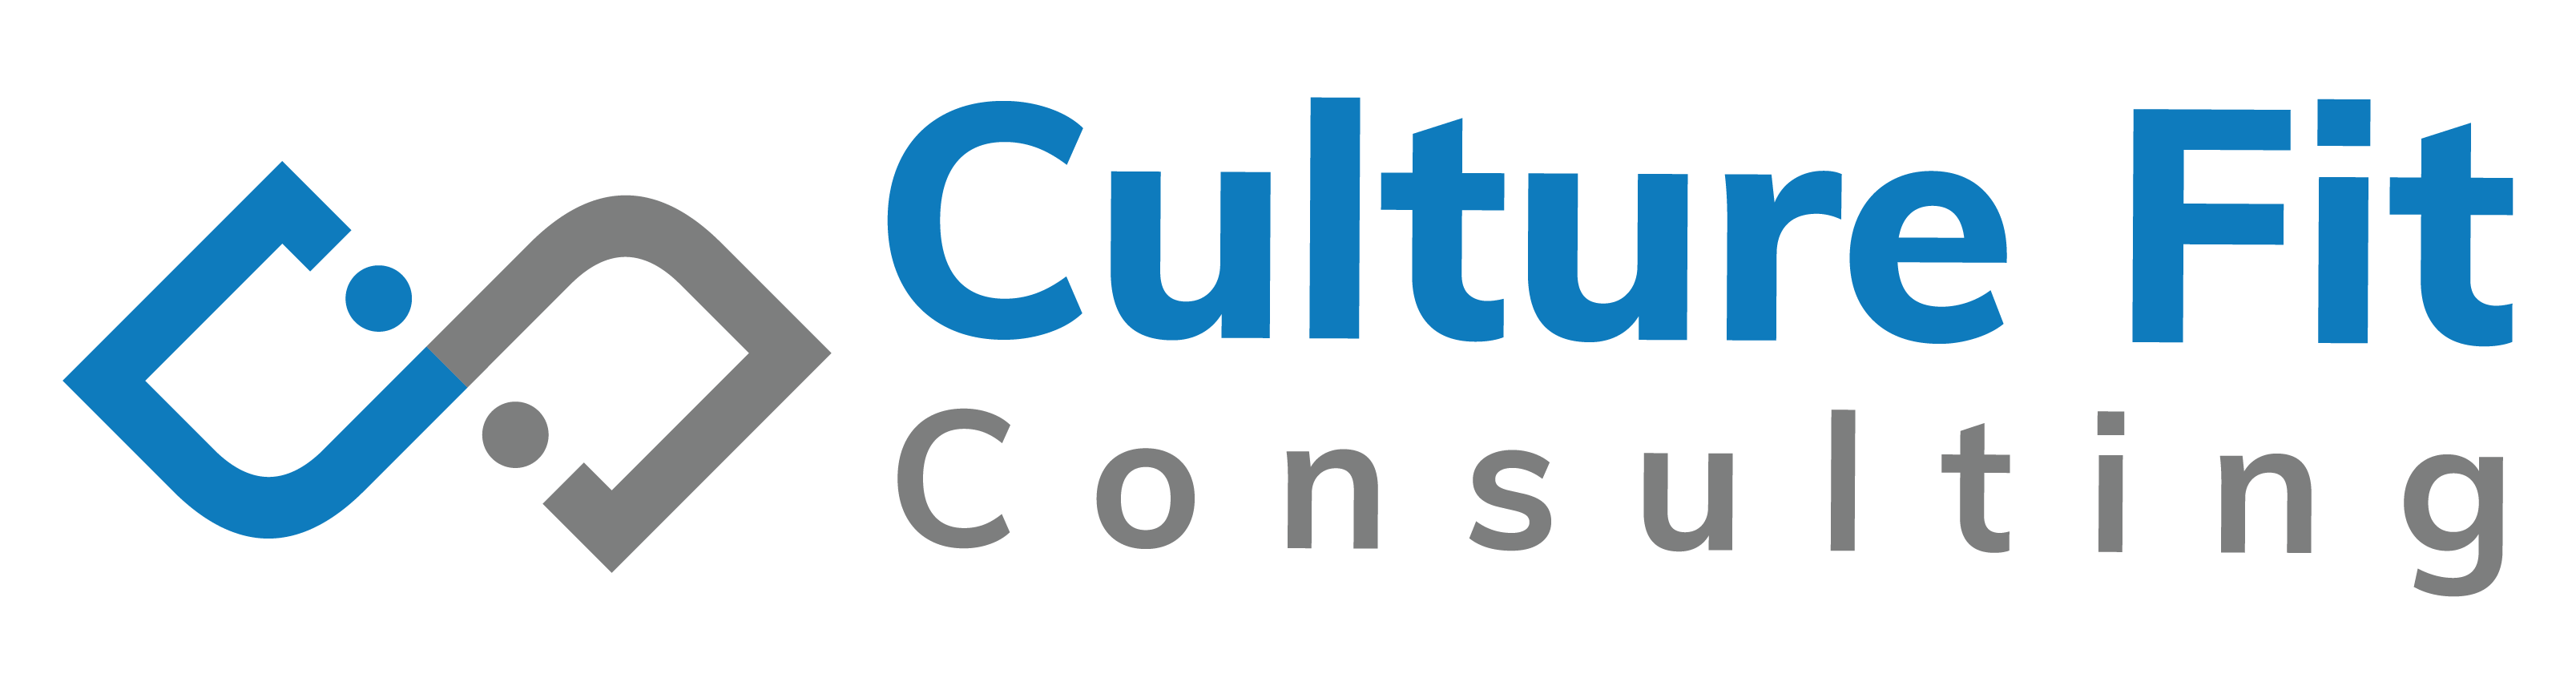 Culture Fit Consulting Ltd